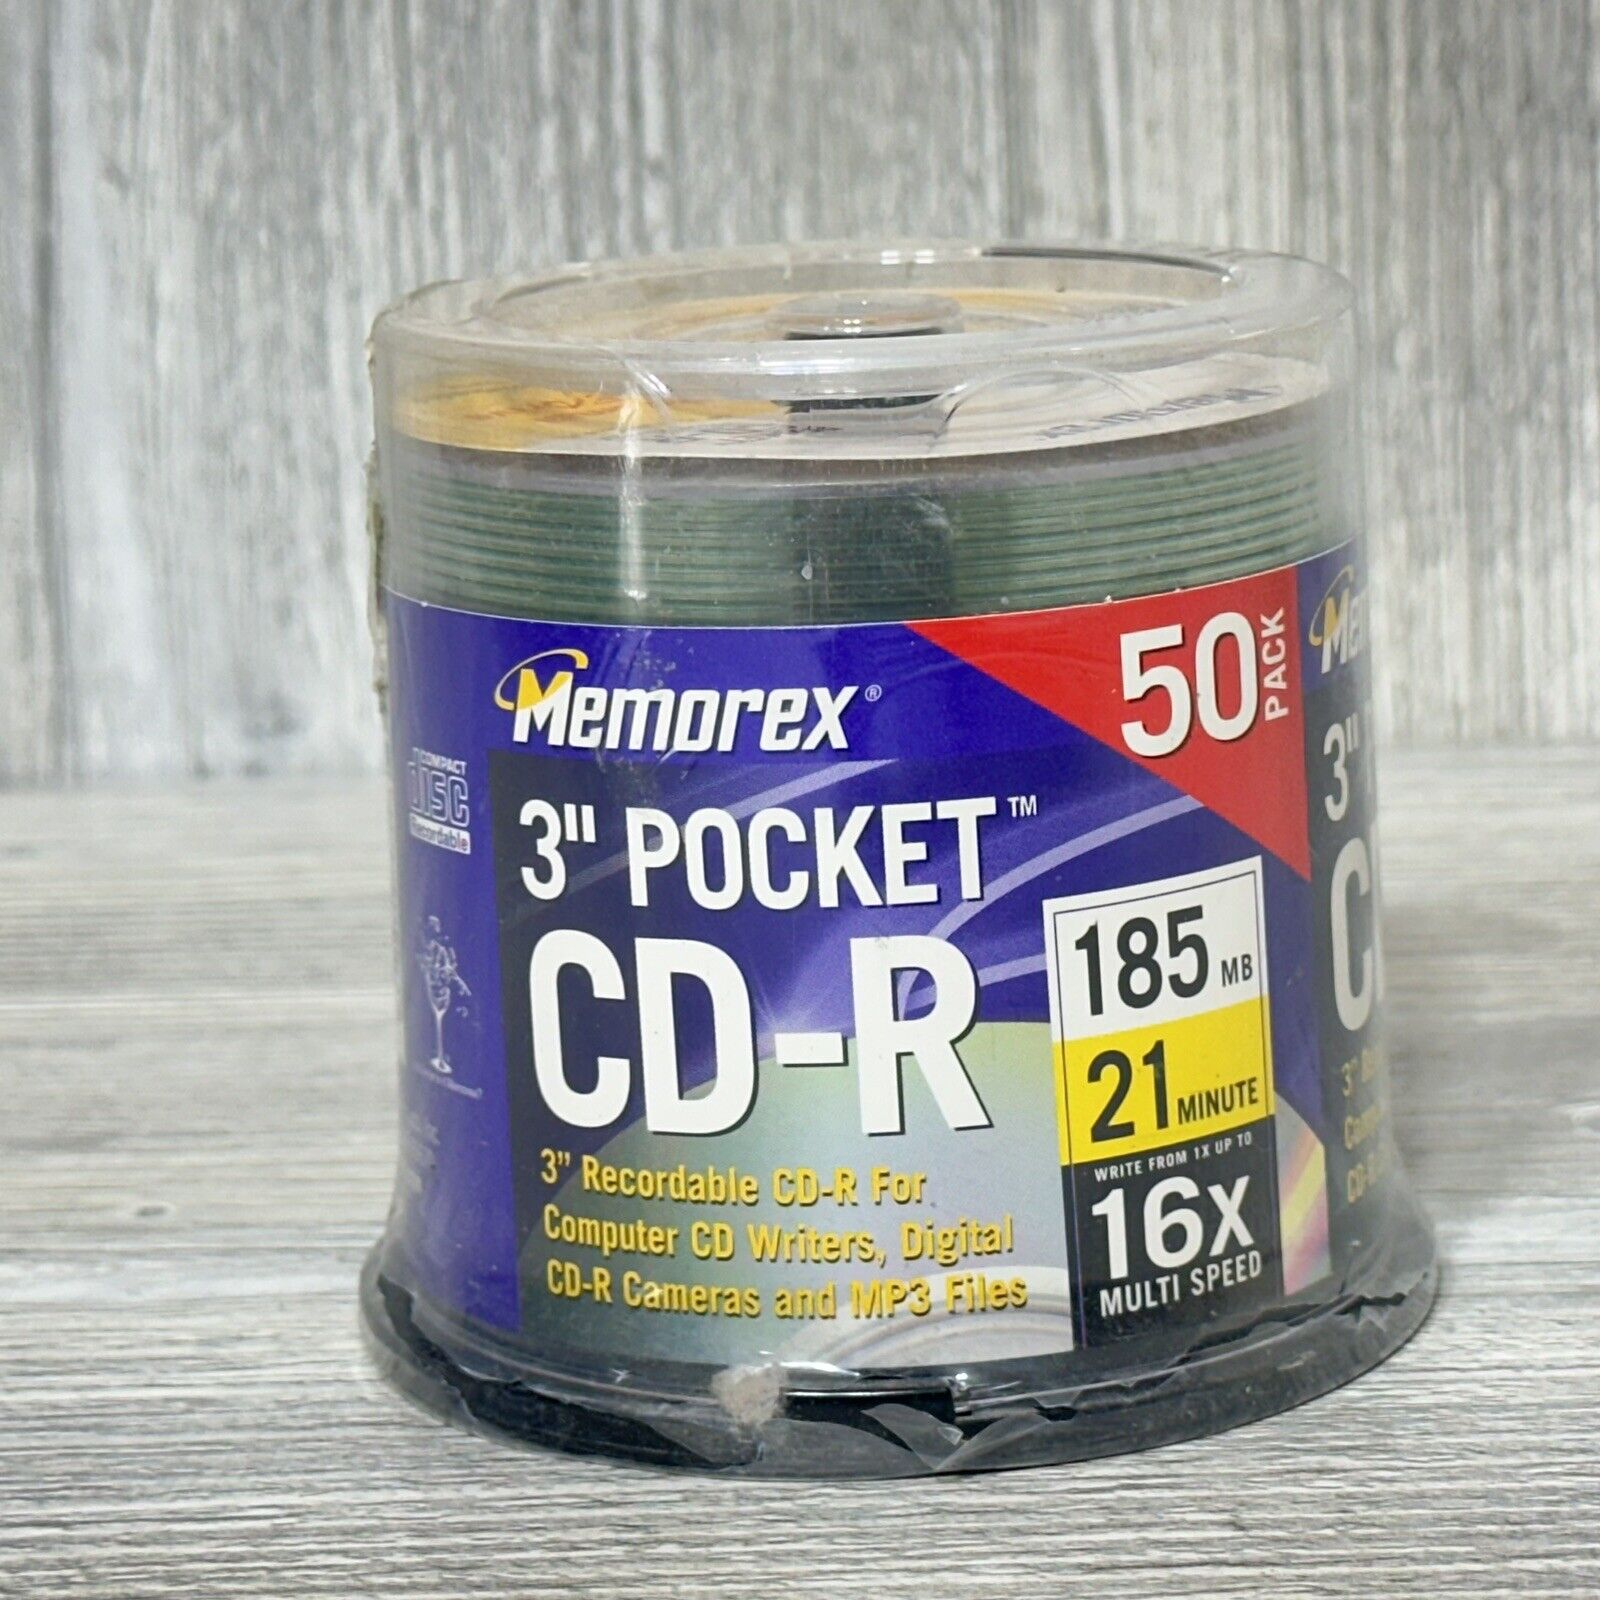 Memorex Pocket CD-R 210mb 24 minute 24x Speed 50 Pack New